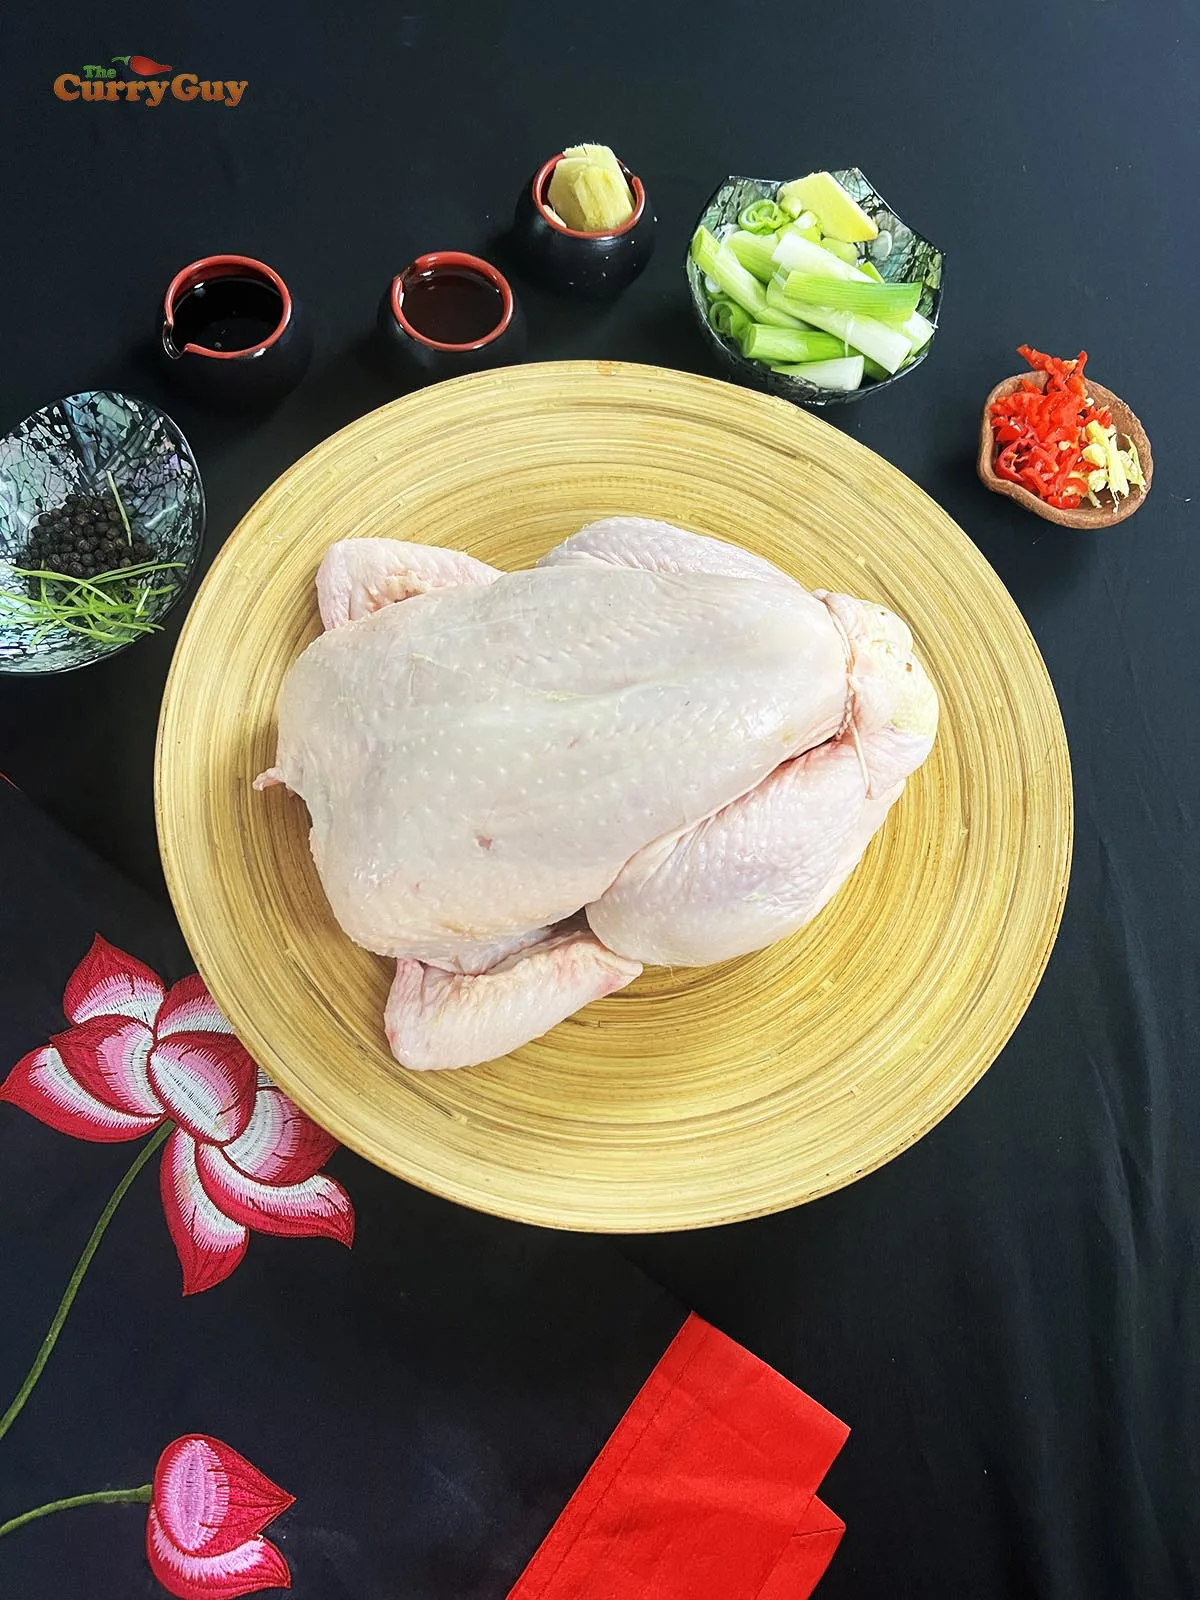 Ingredients for Hainan chicken